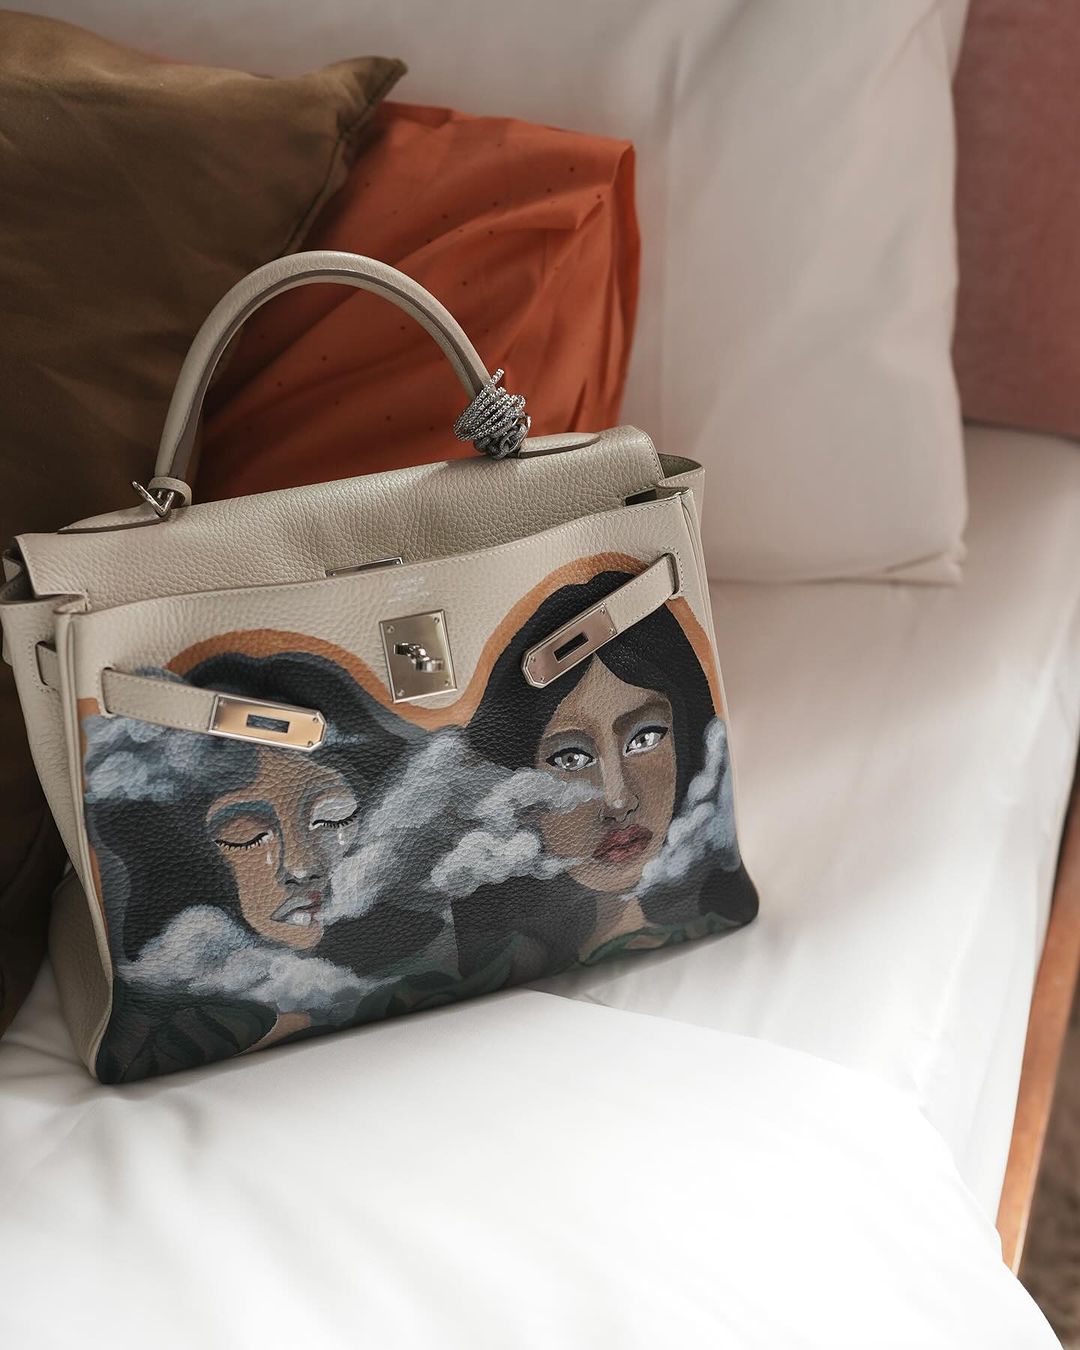 Heart Evangelista's latest hand-painted Hermes bag